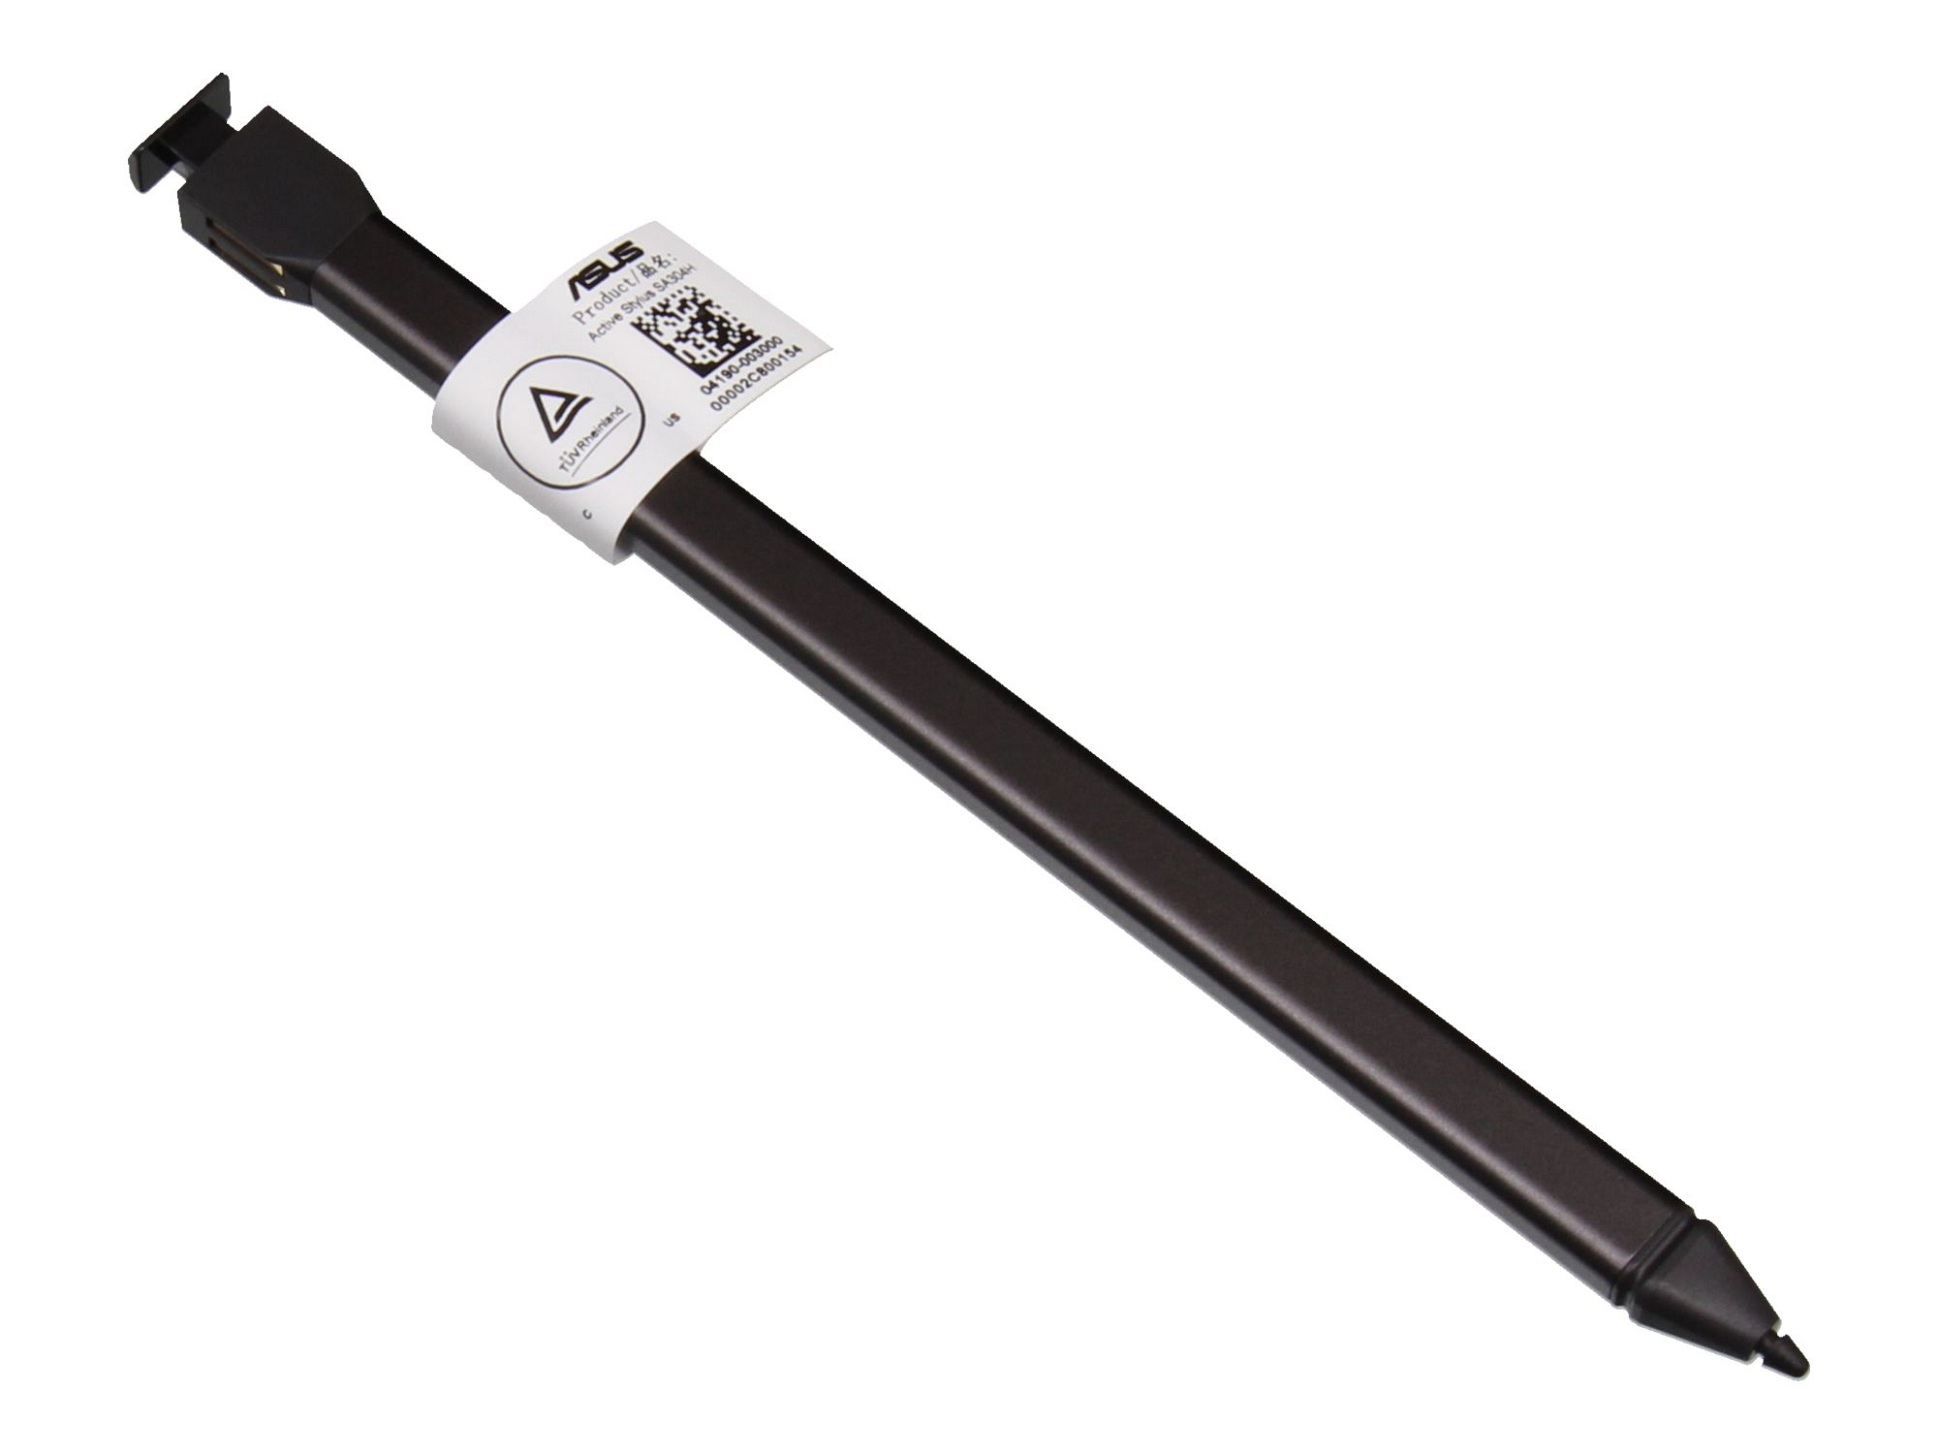 Asus SA304H_V1.0 Stylus Pen